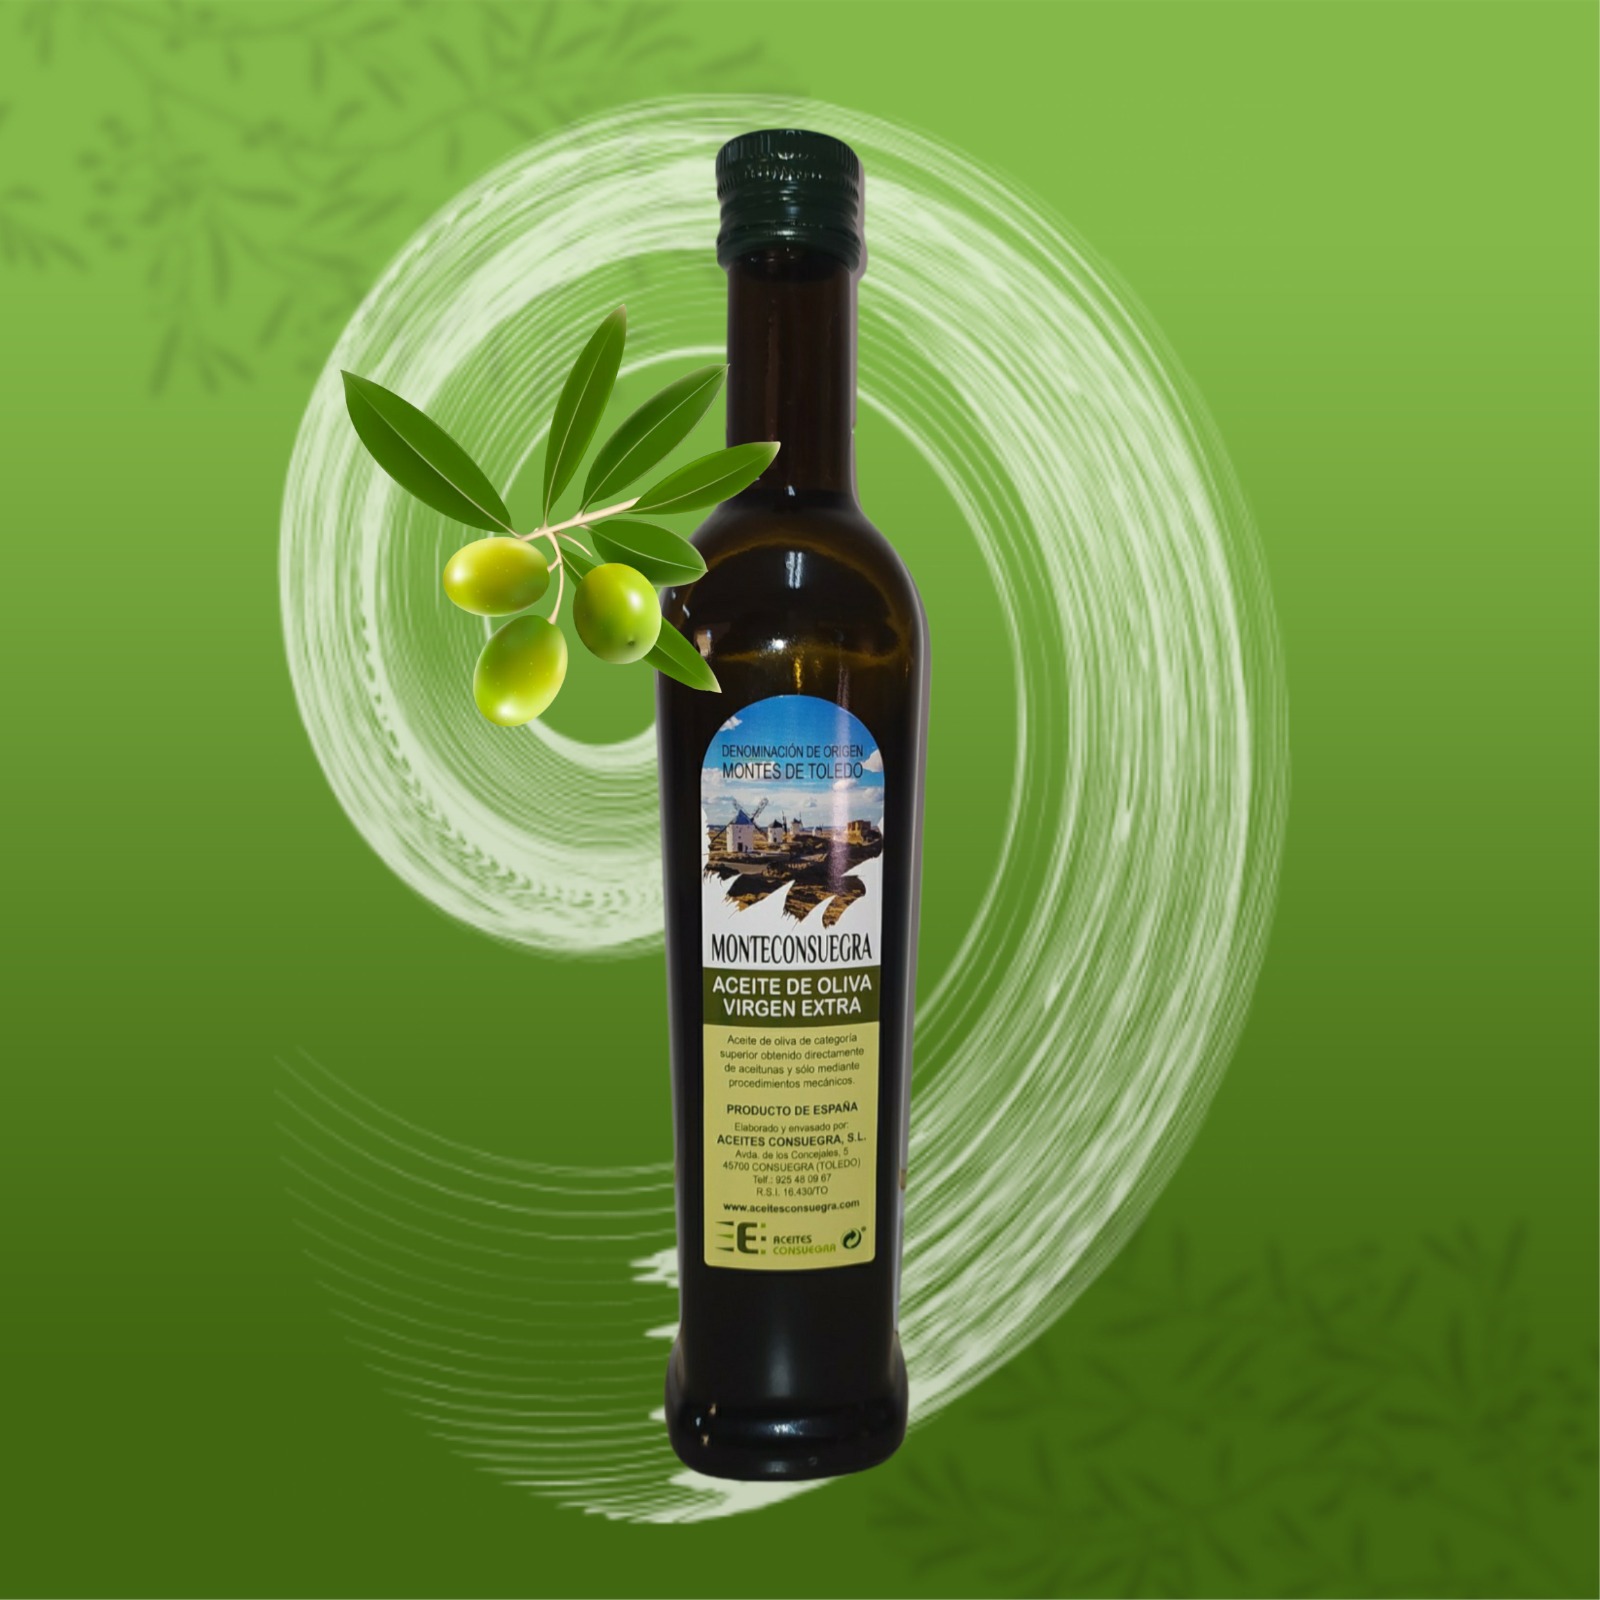 alimentos Sagra aceite de oliva